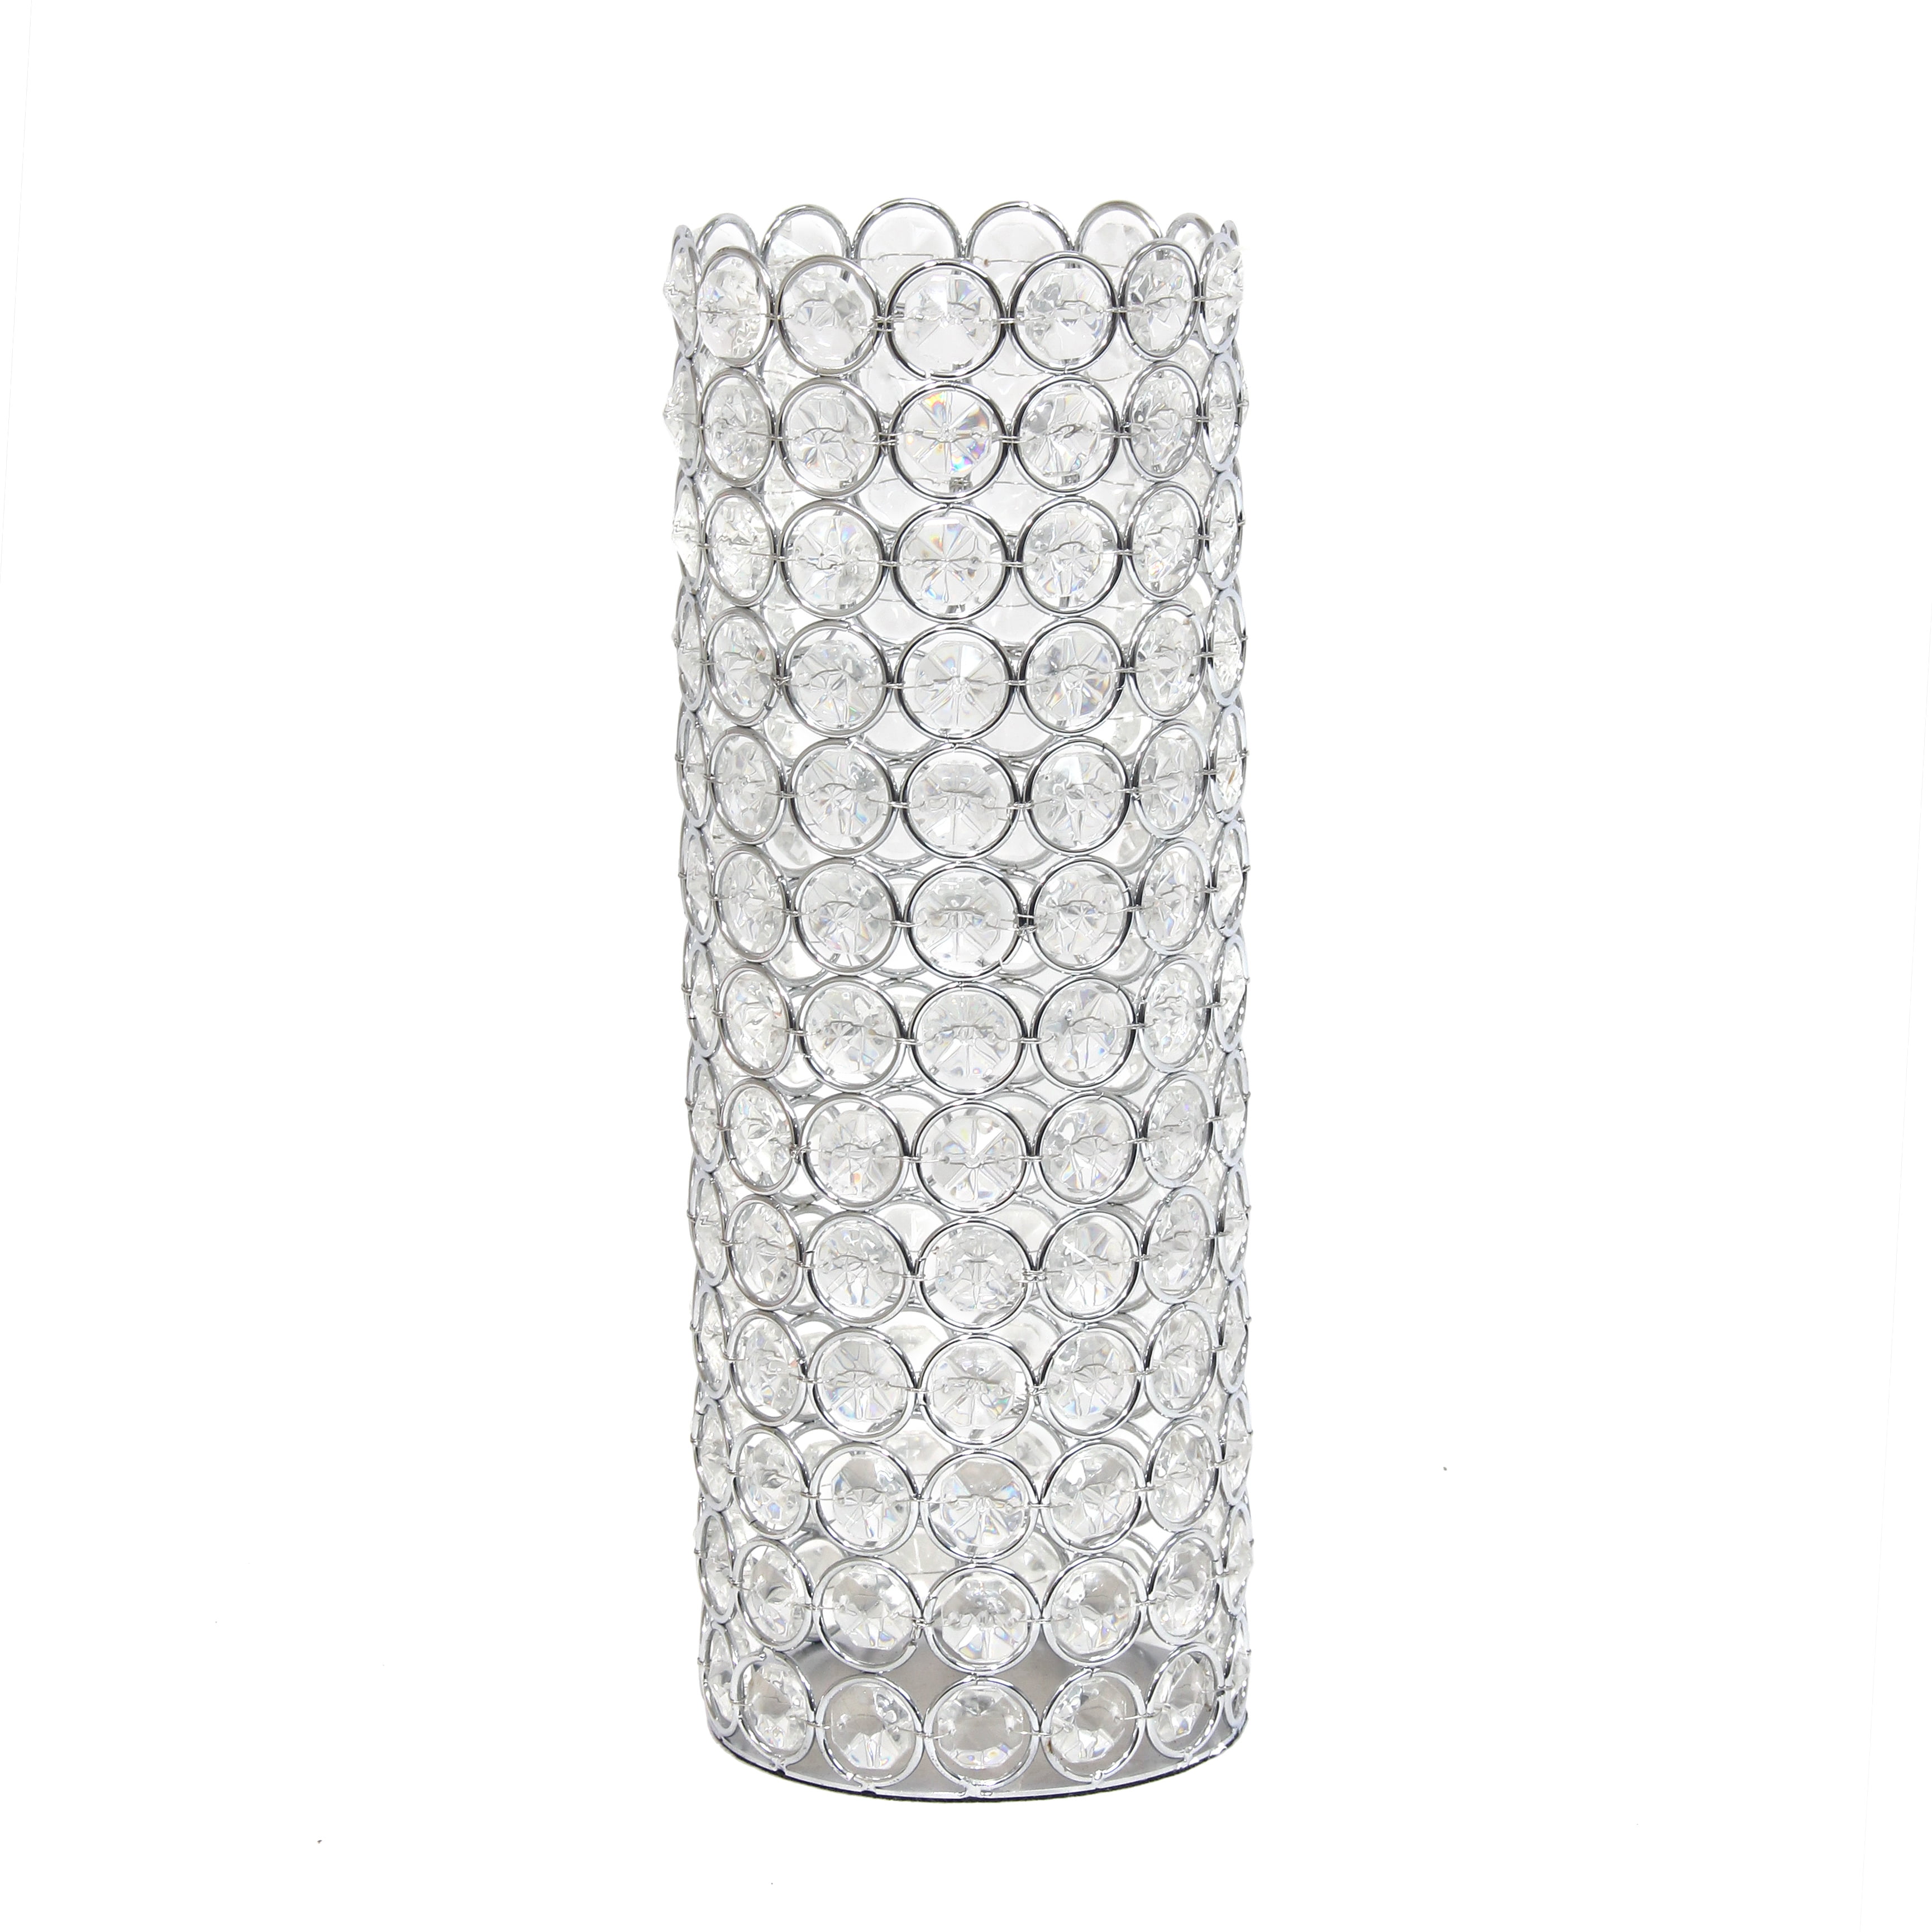 Elegant Designs Hg1009-chr 11.25 In. Elipse Crystal Decorative Vase, Chrome